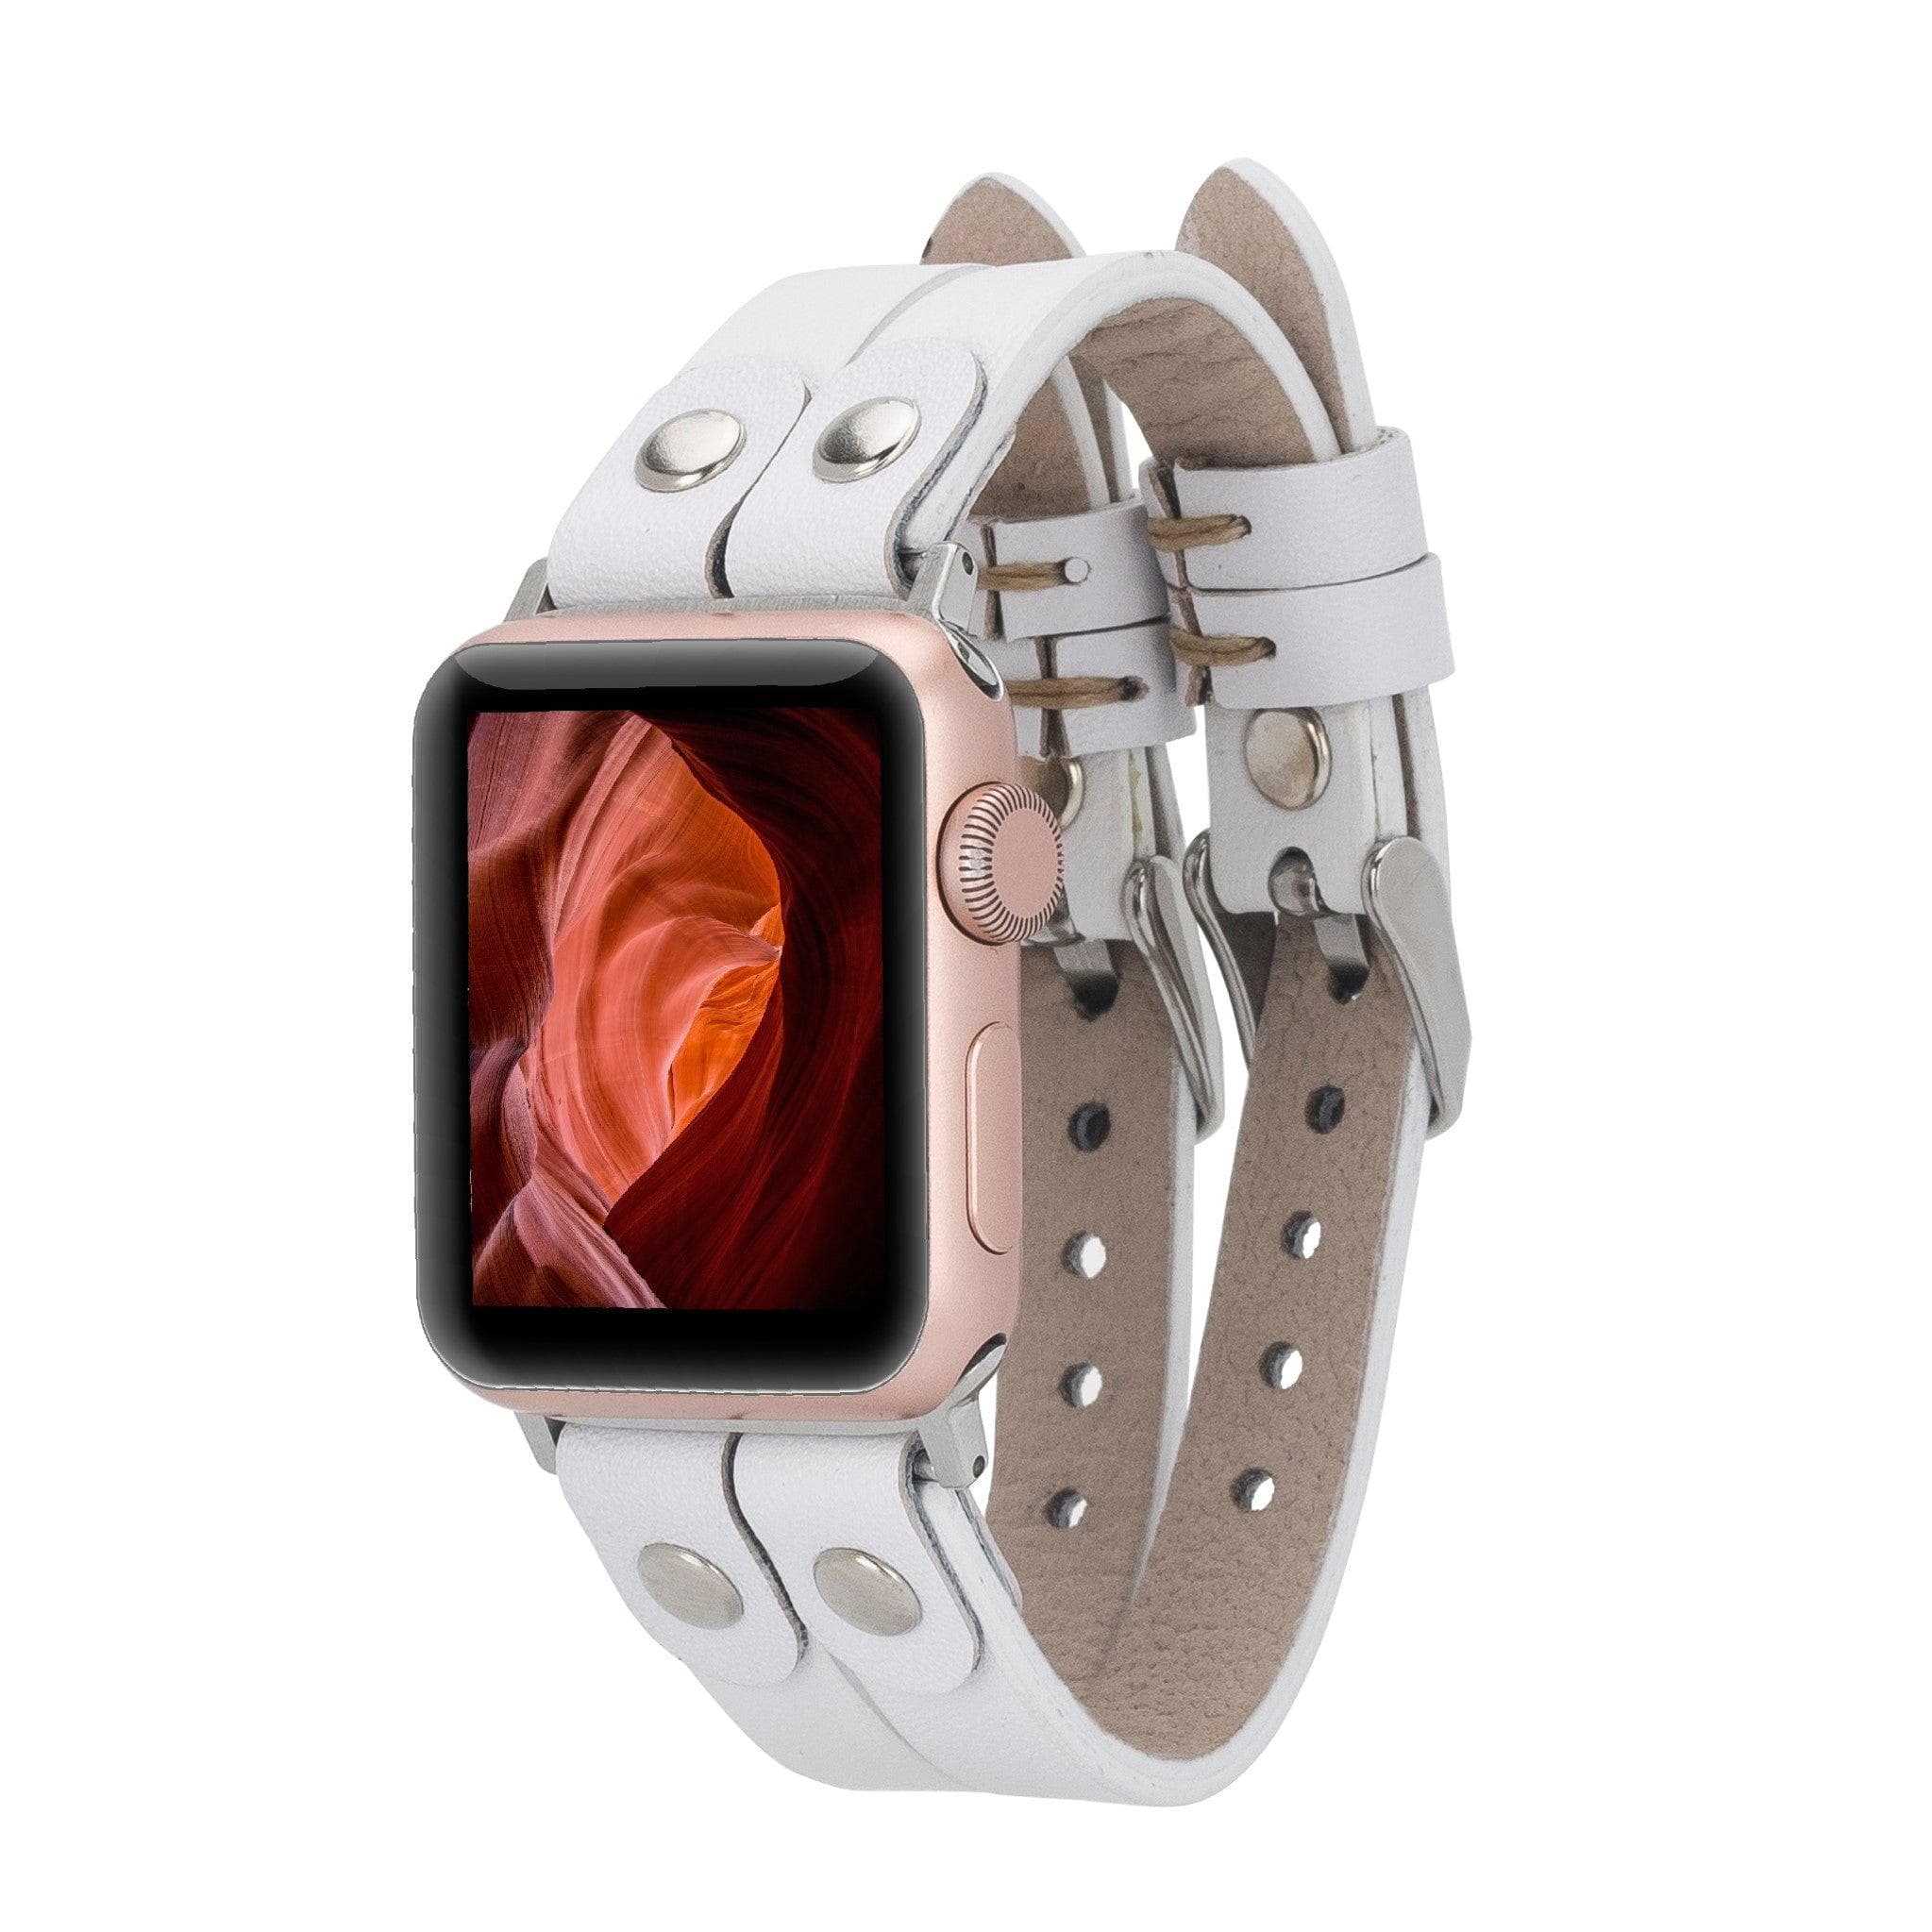 Durham Ely Apple Watch Leather Straps F3 / Silver Bomonti